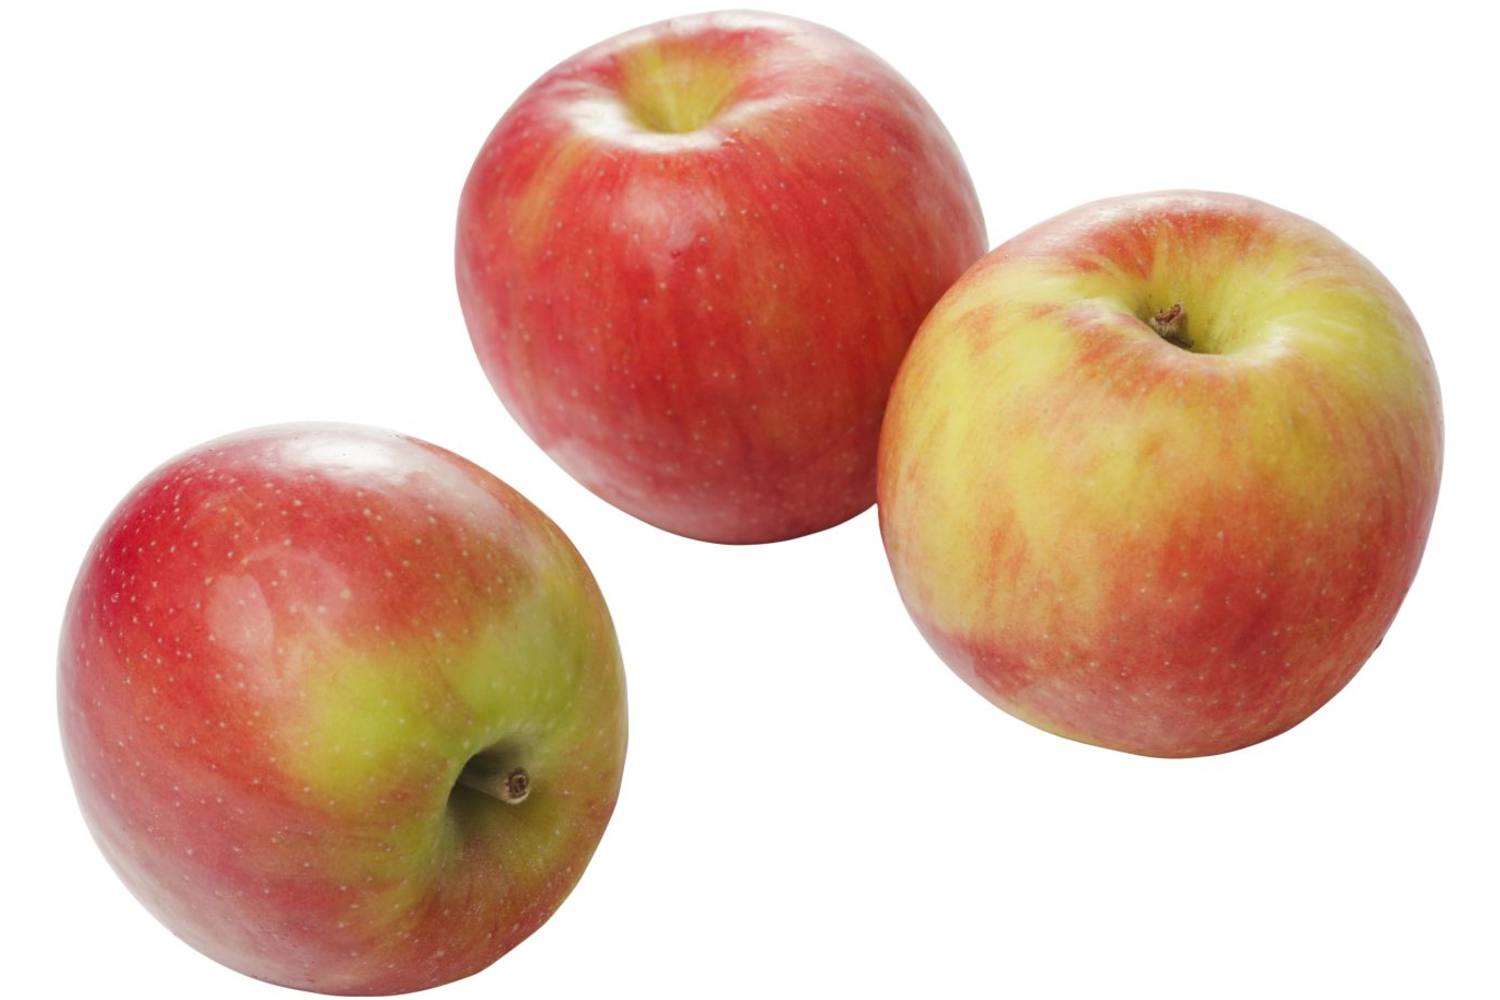 BIO Appels kist 11 kilogram 1